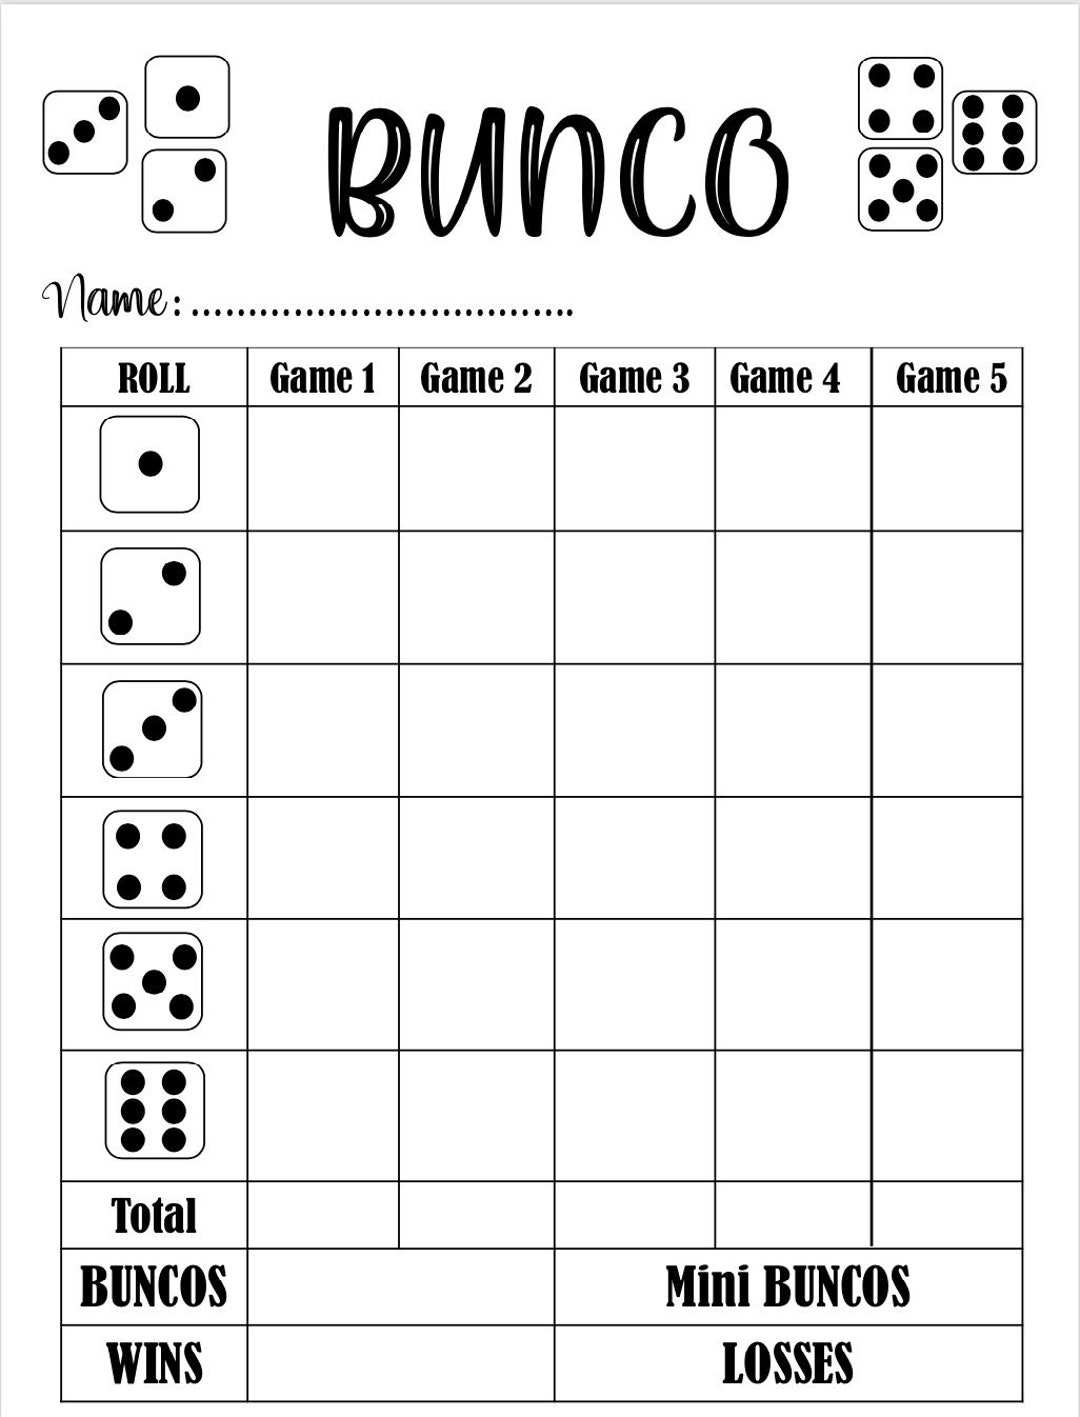 bunco-score-sheets-x4-bunco-score-sheets-printable-pdf-etsy